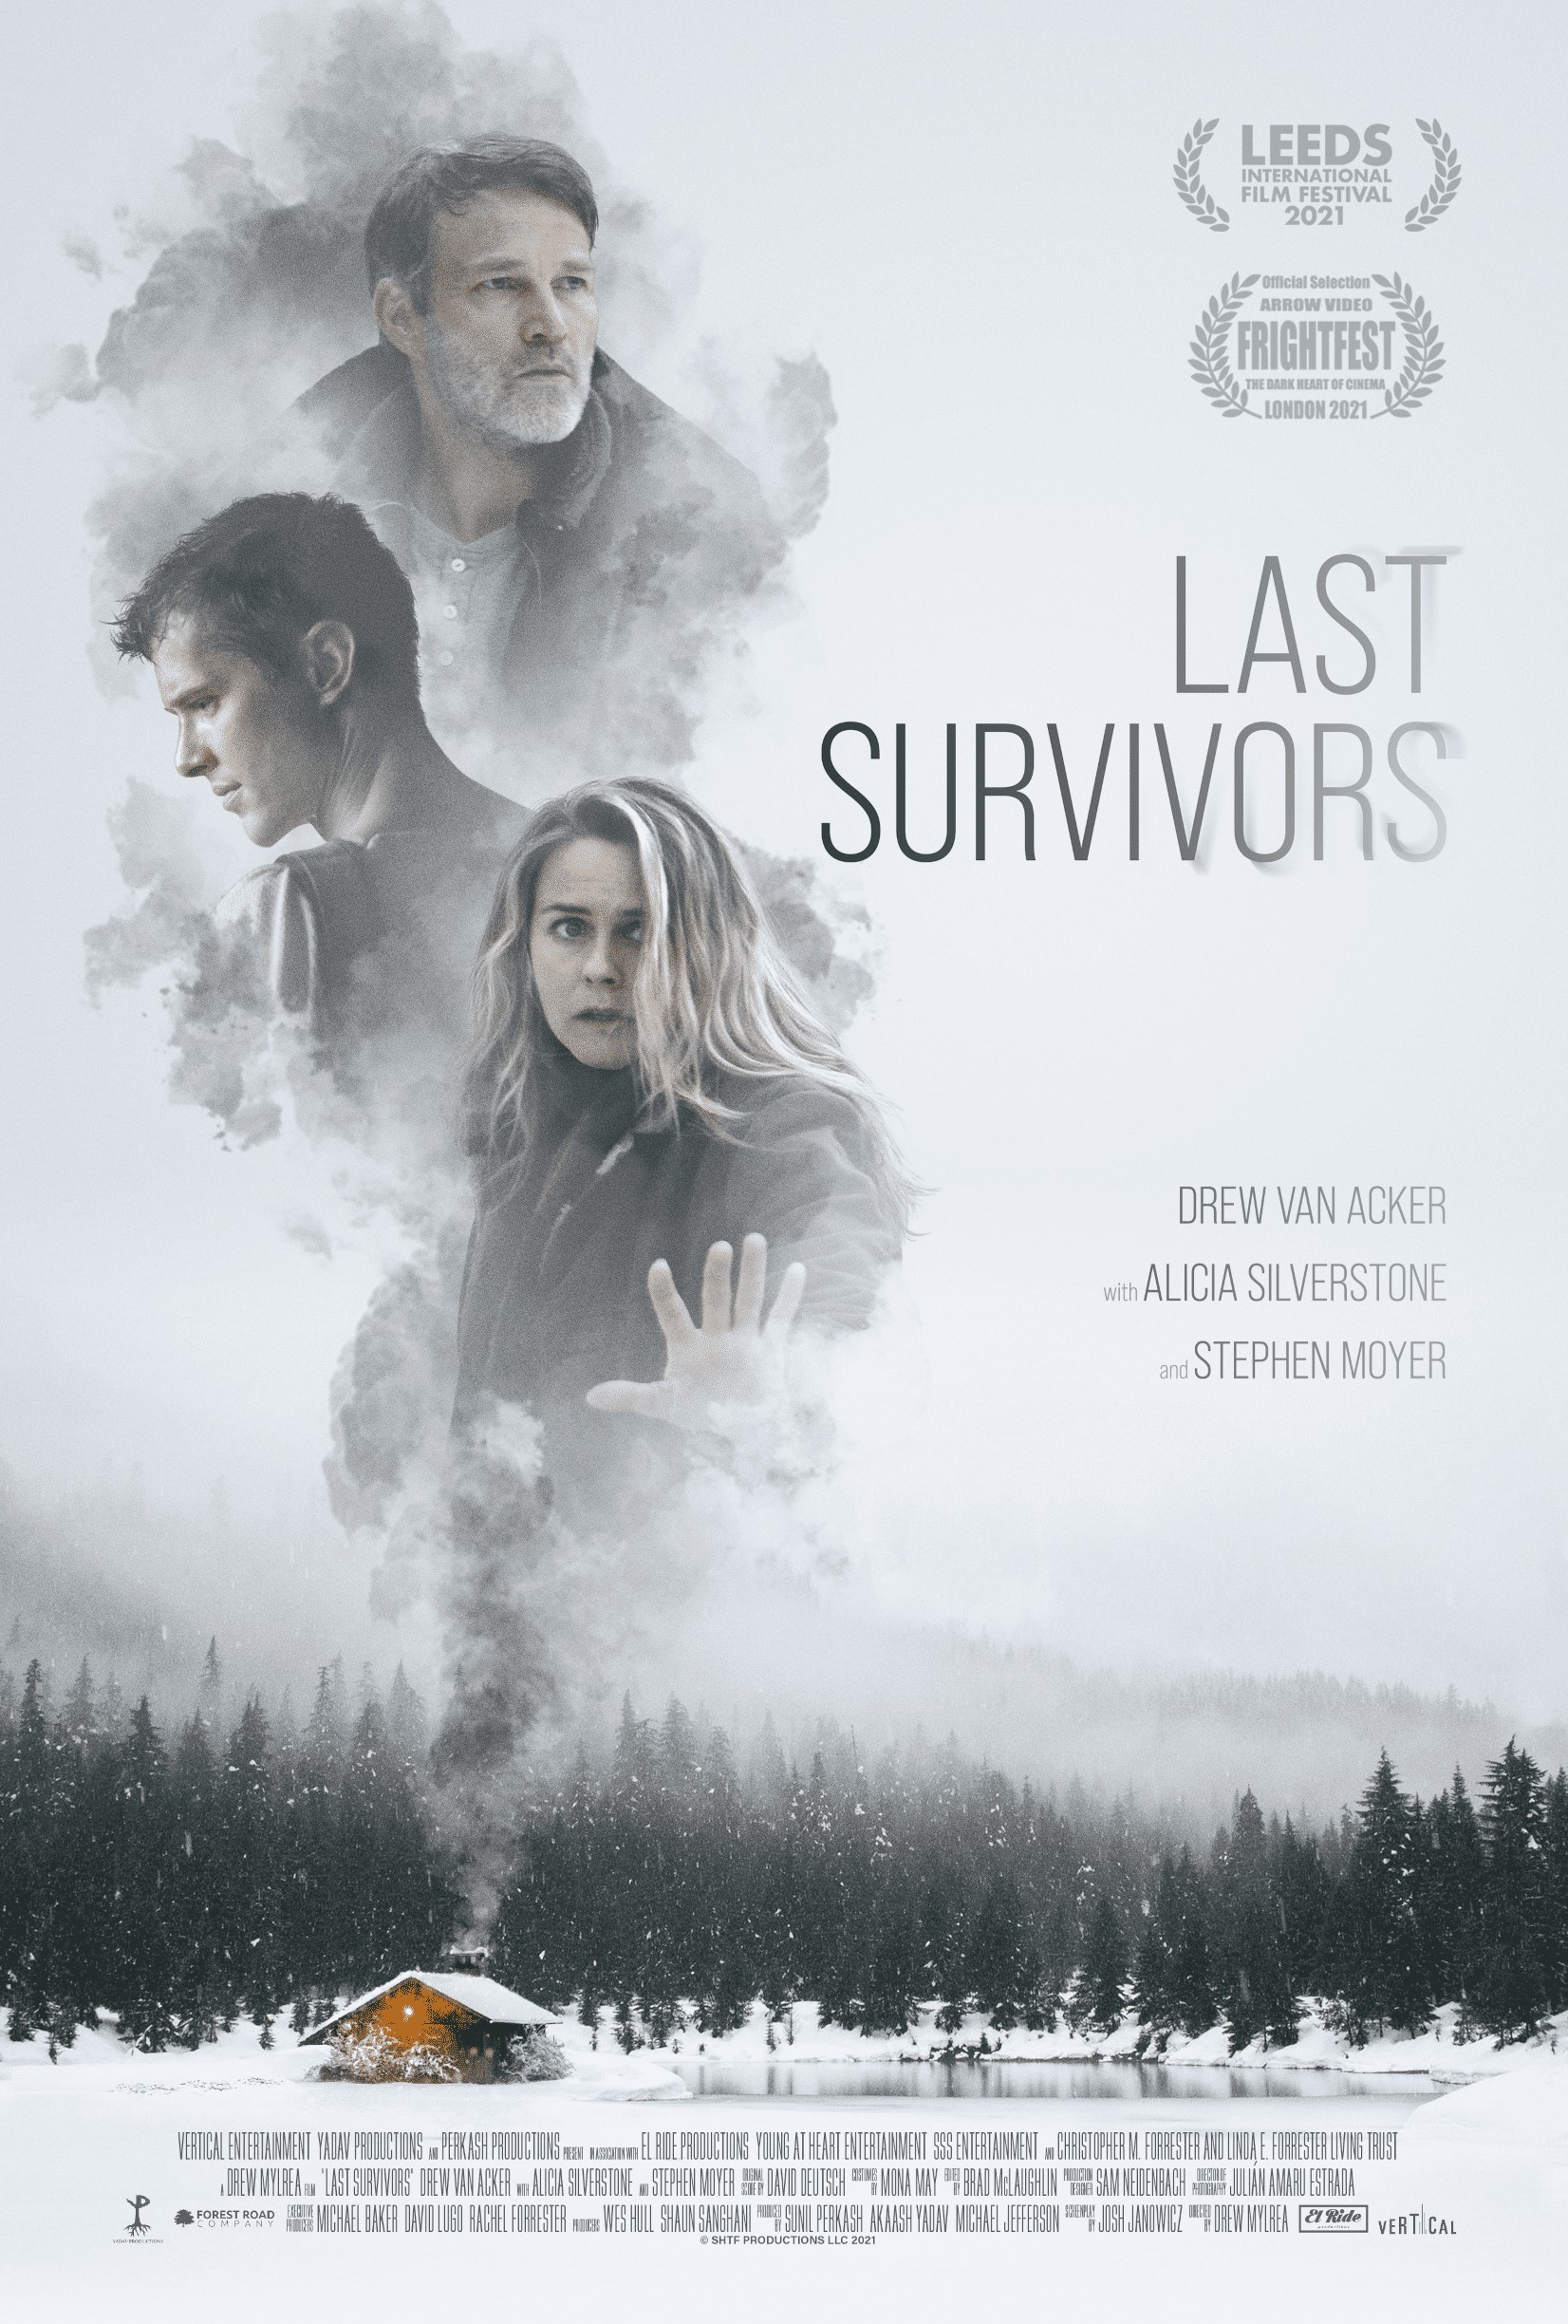 Last survivors poster movie trailers